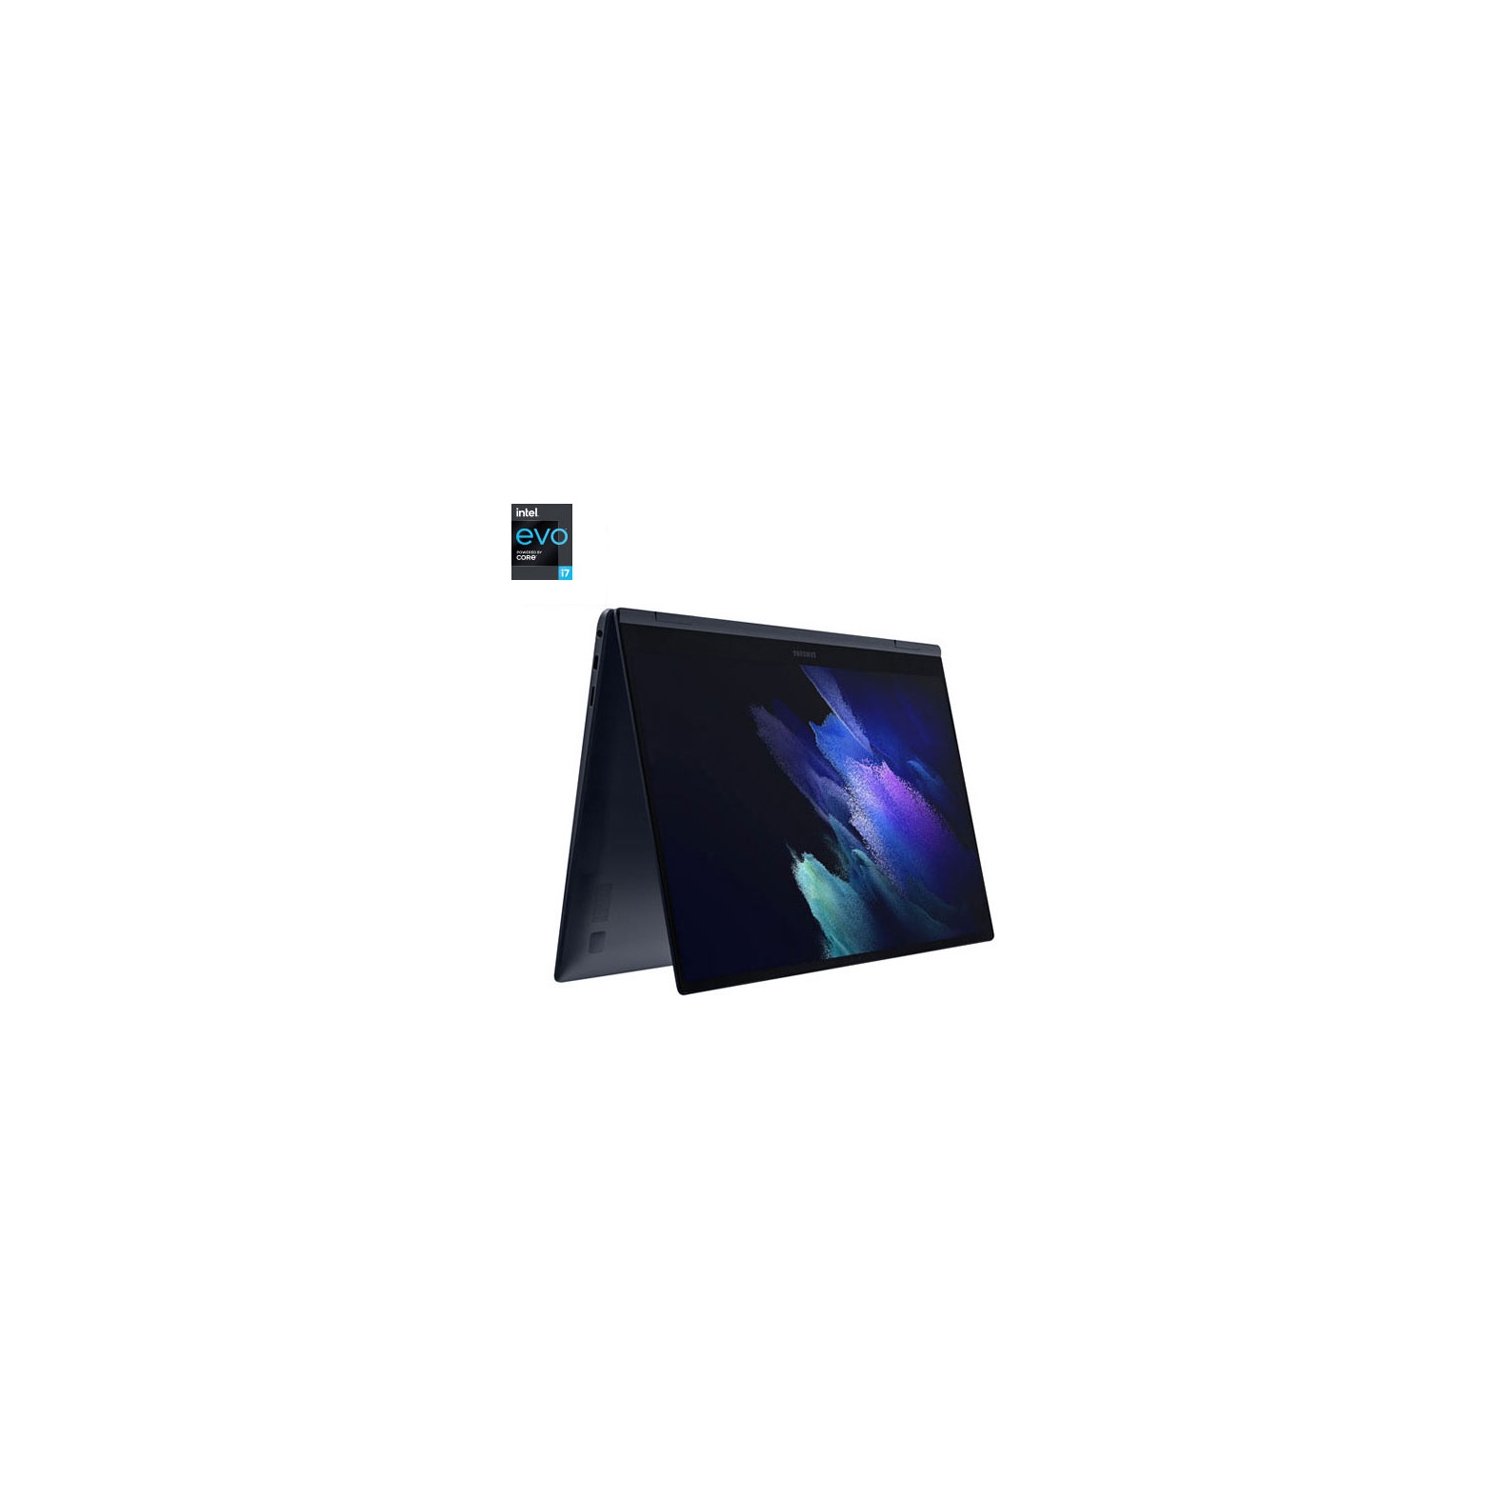 Samsung Galaxy Book Pro 360 15.6" 2-in-1 Laptop - Navy (Intel Core i7-1165G7/512GB SSD/8GB RAM/Win 11) - Refurbished